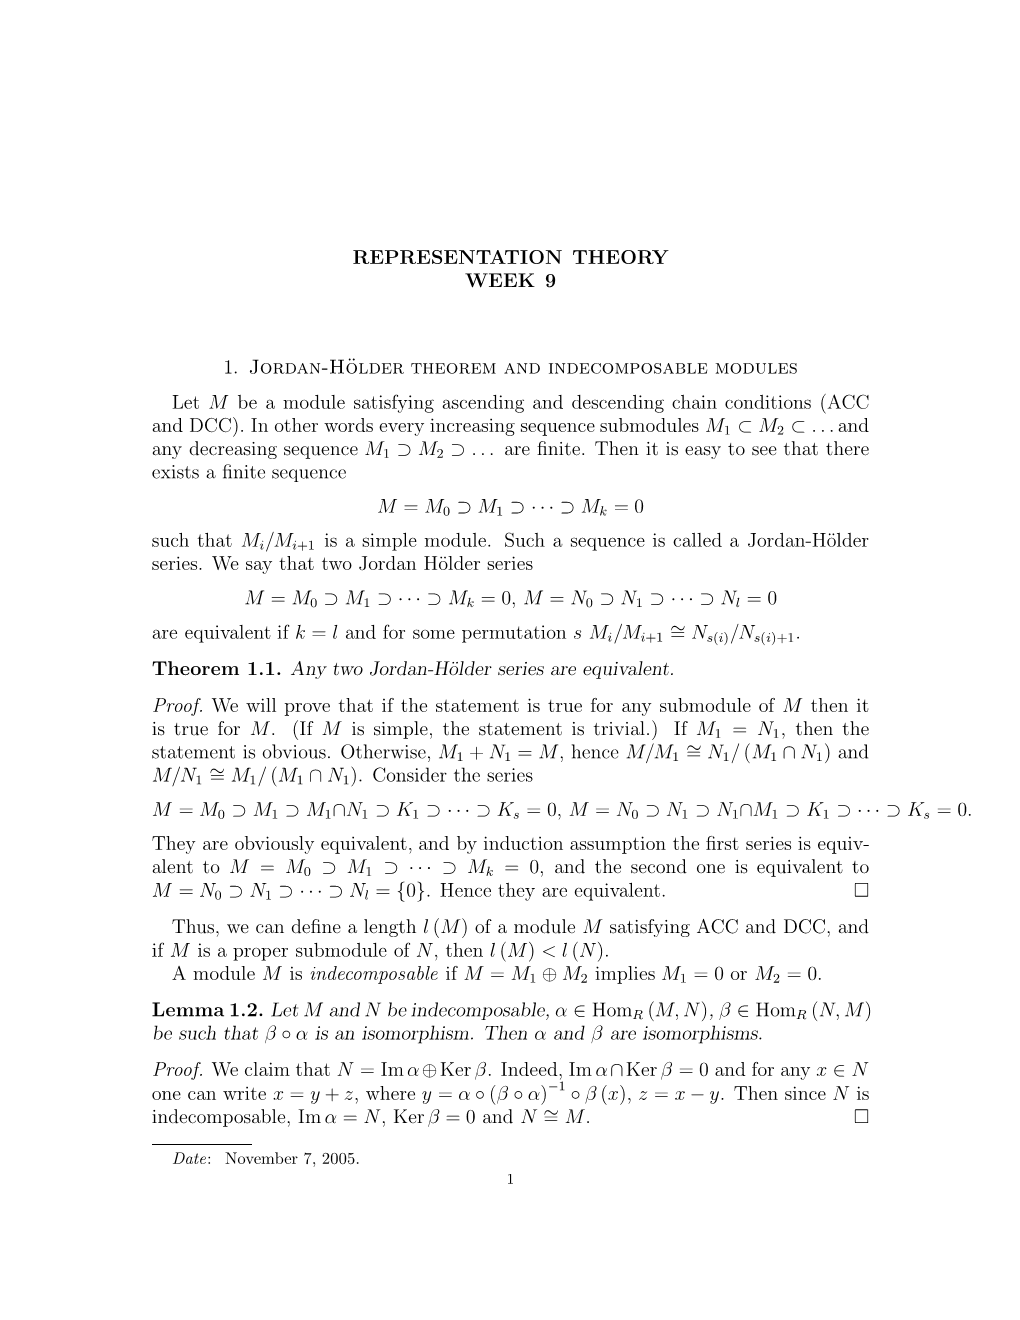 REPRESENTATION THEORY WEEK 9 1. Jordan-Hölder Theorem And